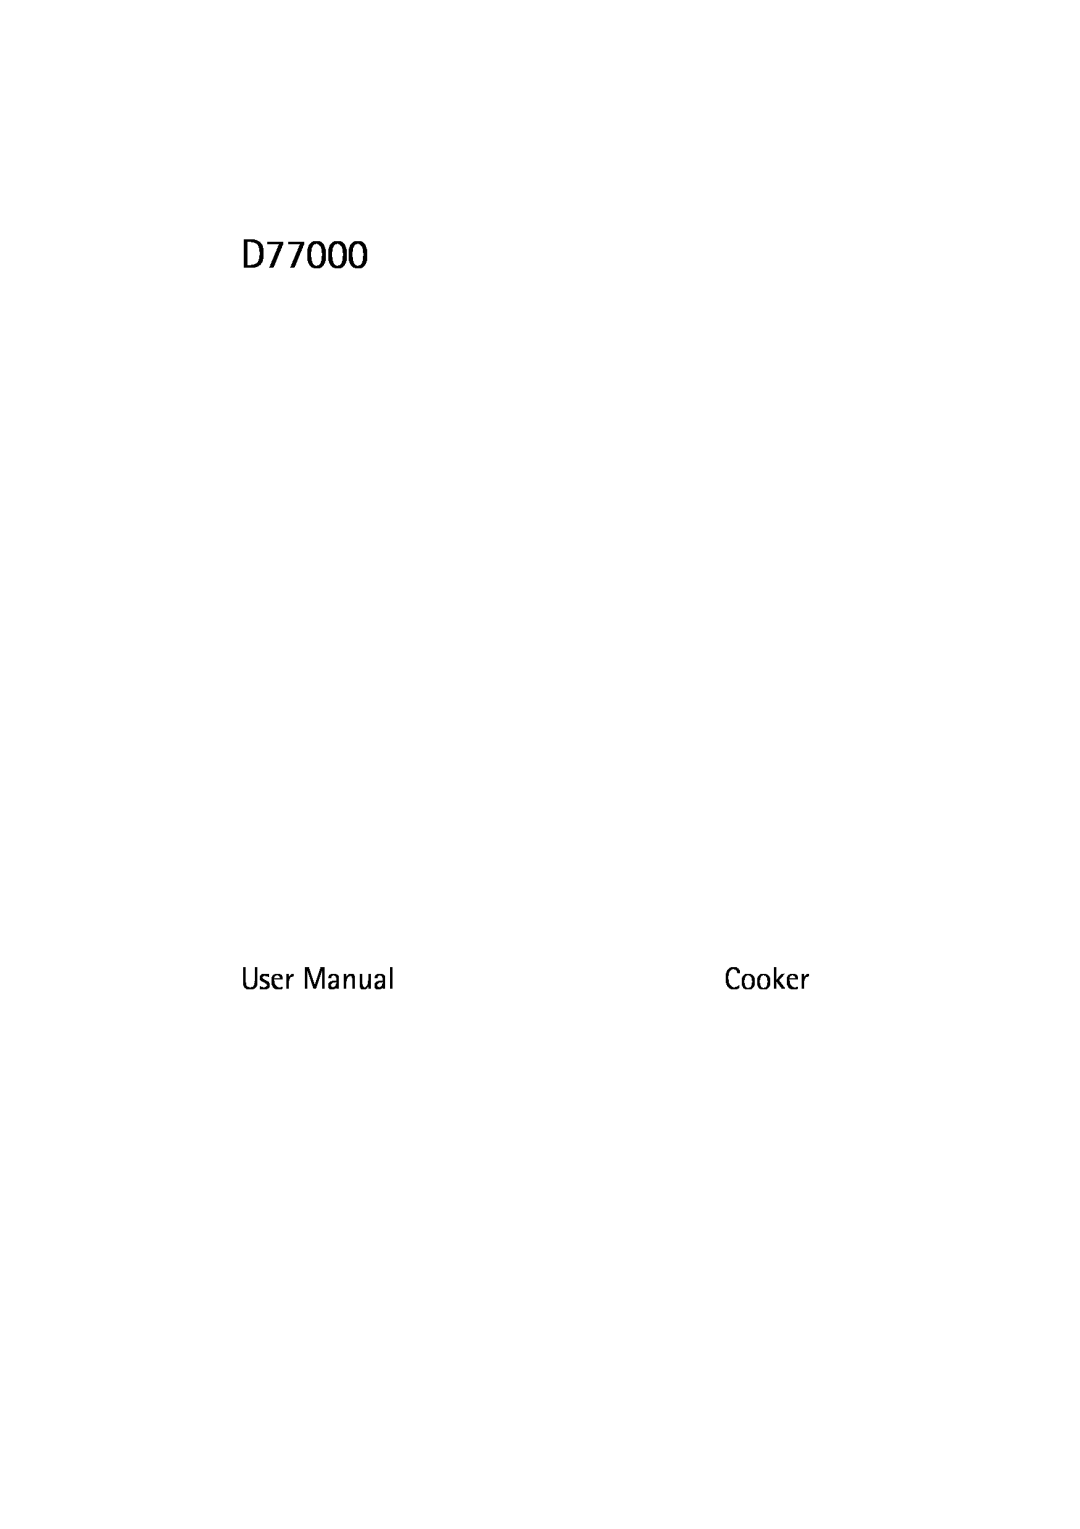 Electrolux D77000 user manual User Manual, Cooker 